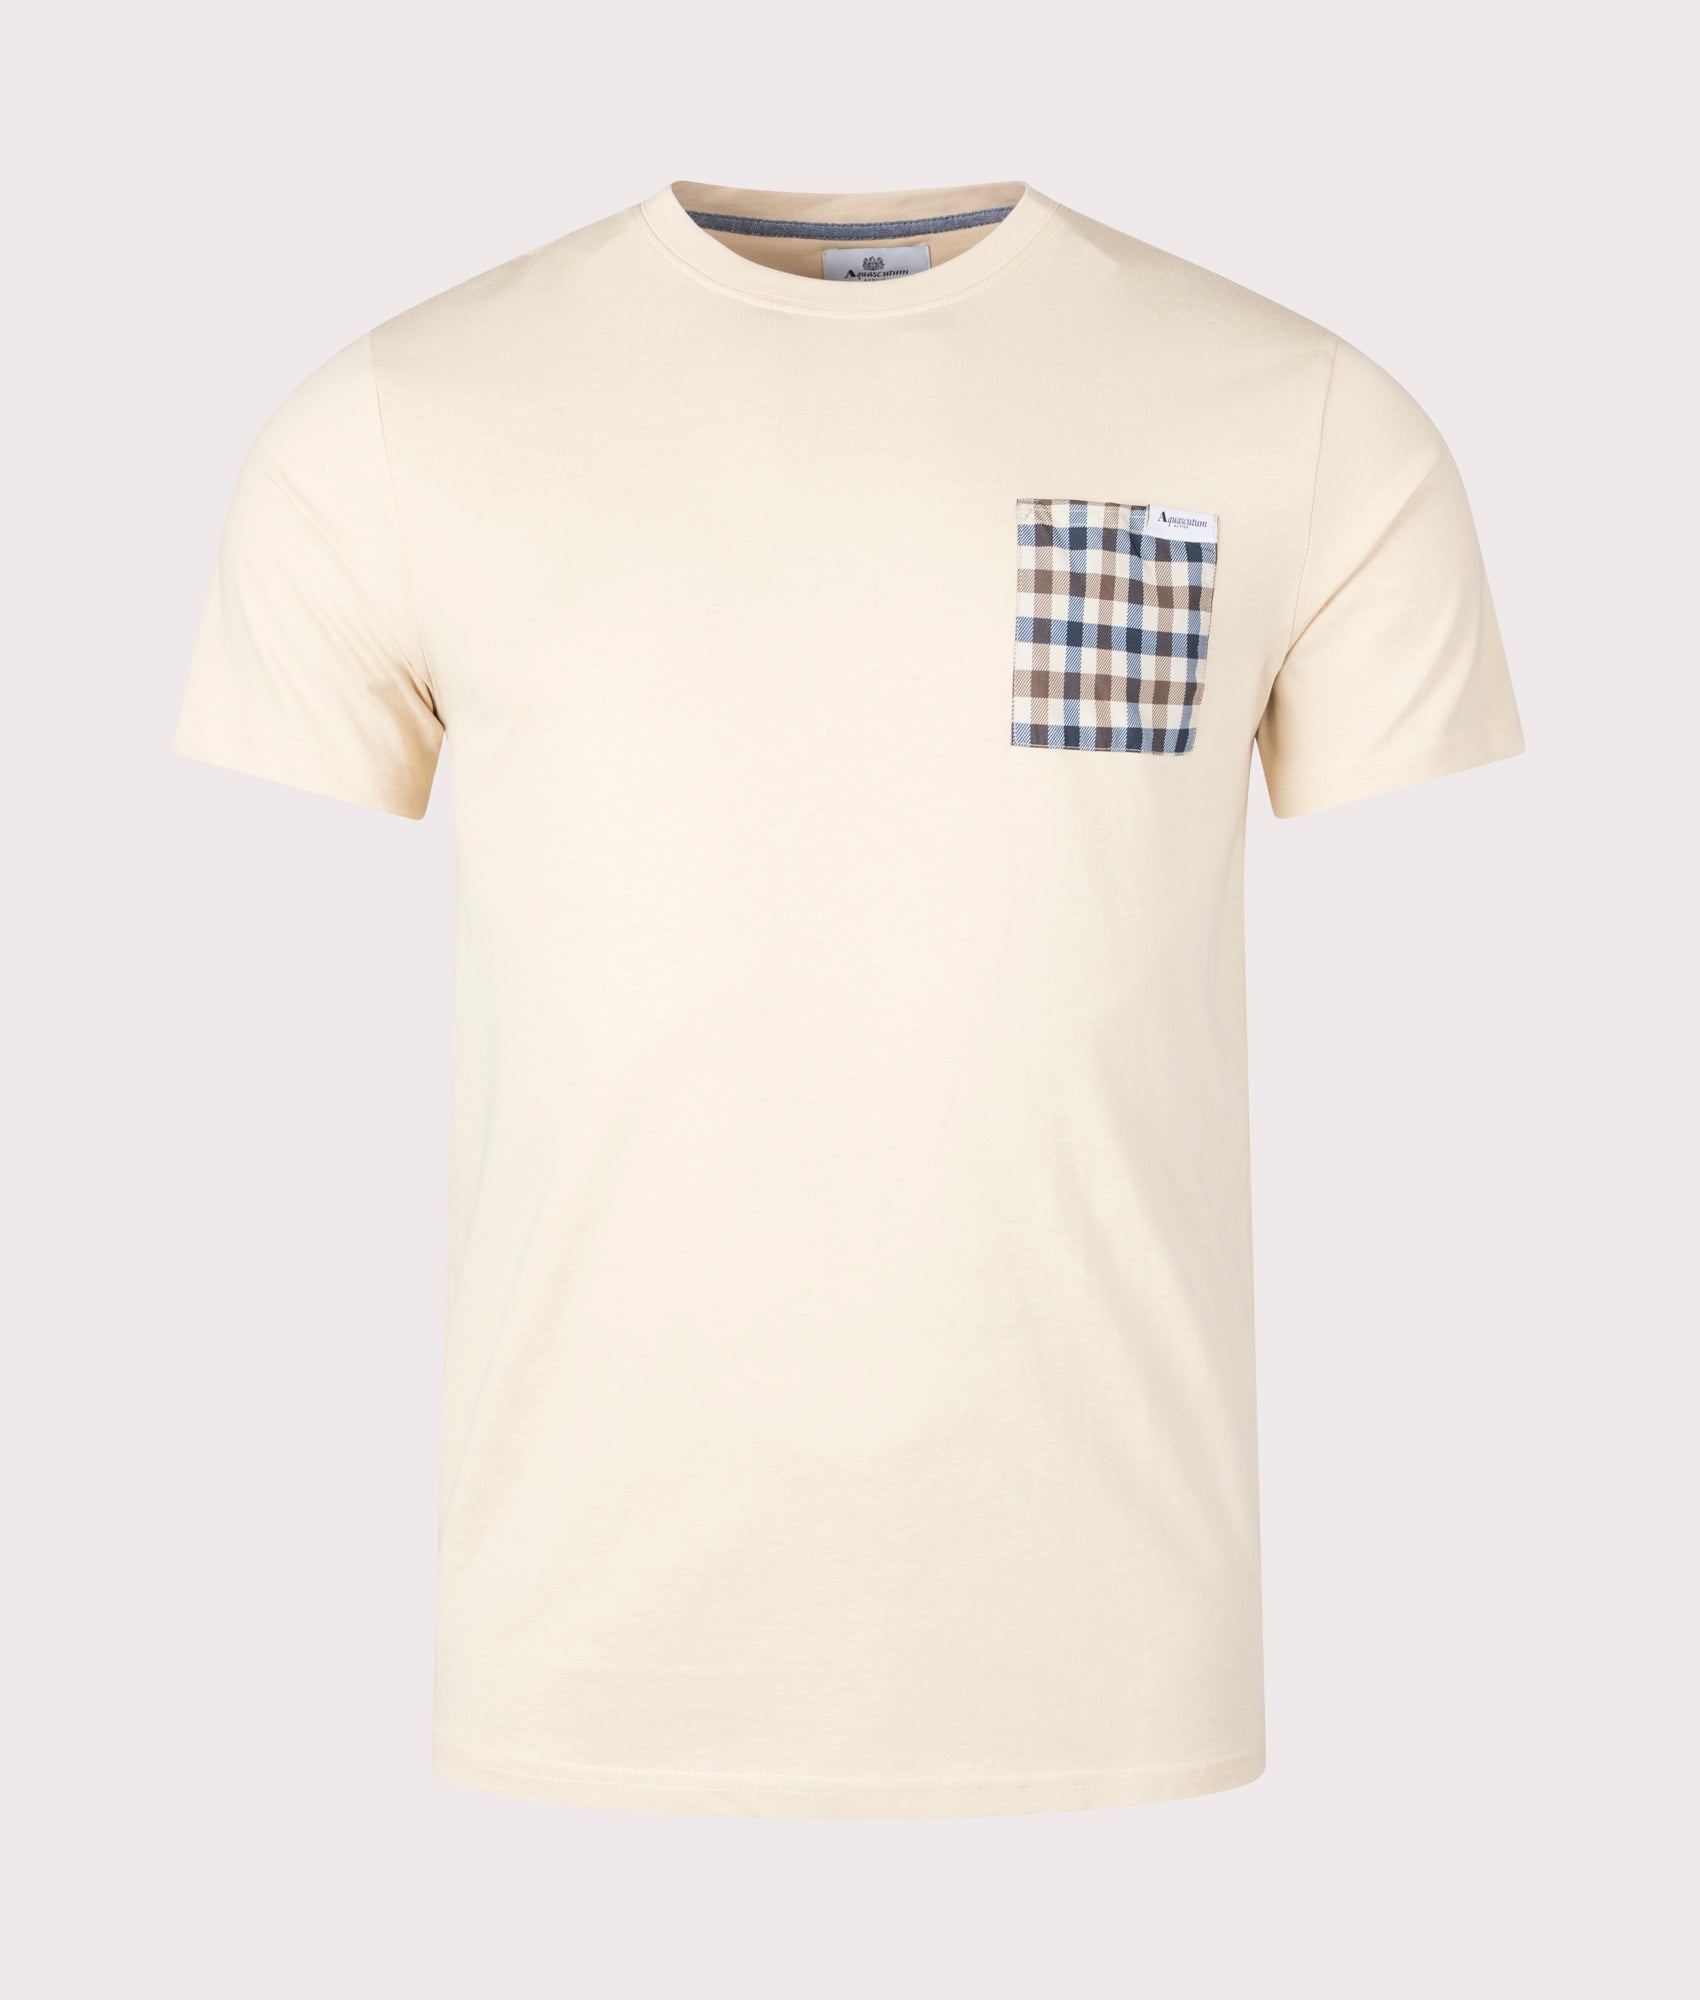 Aquascutum Mens Active Club Check Pocket T-Shirt - Colour: 03 Beige - Size: Medium